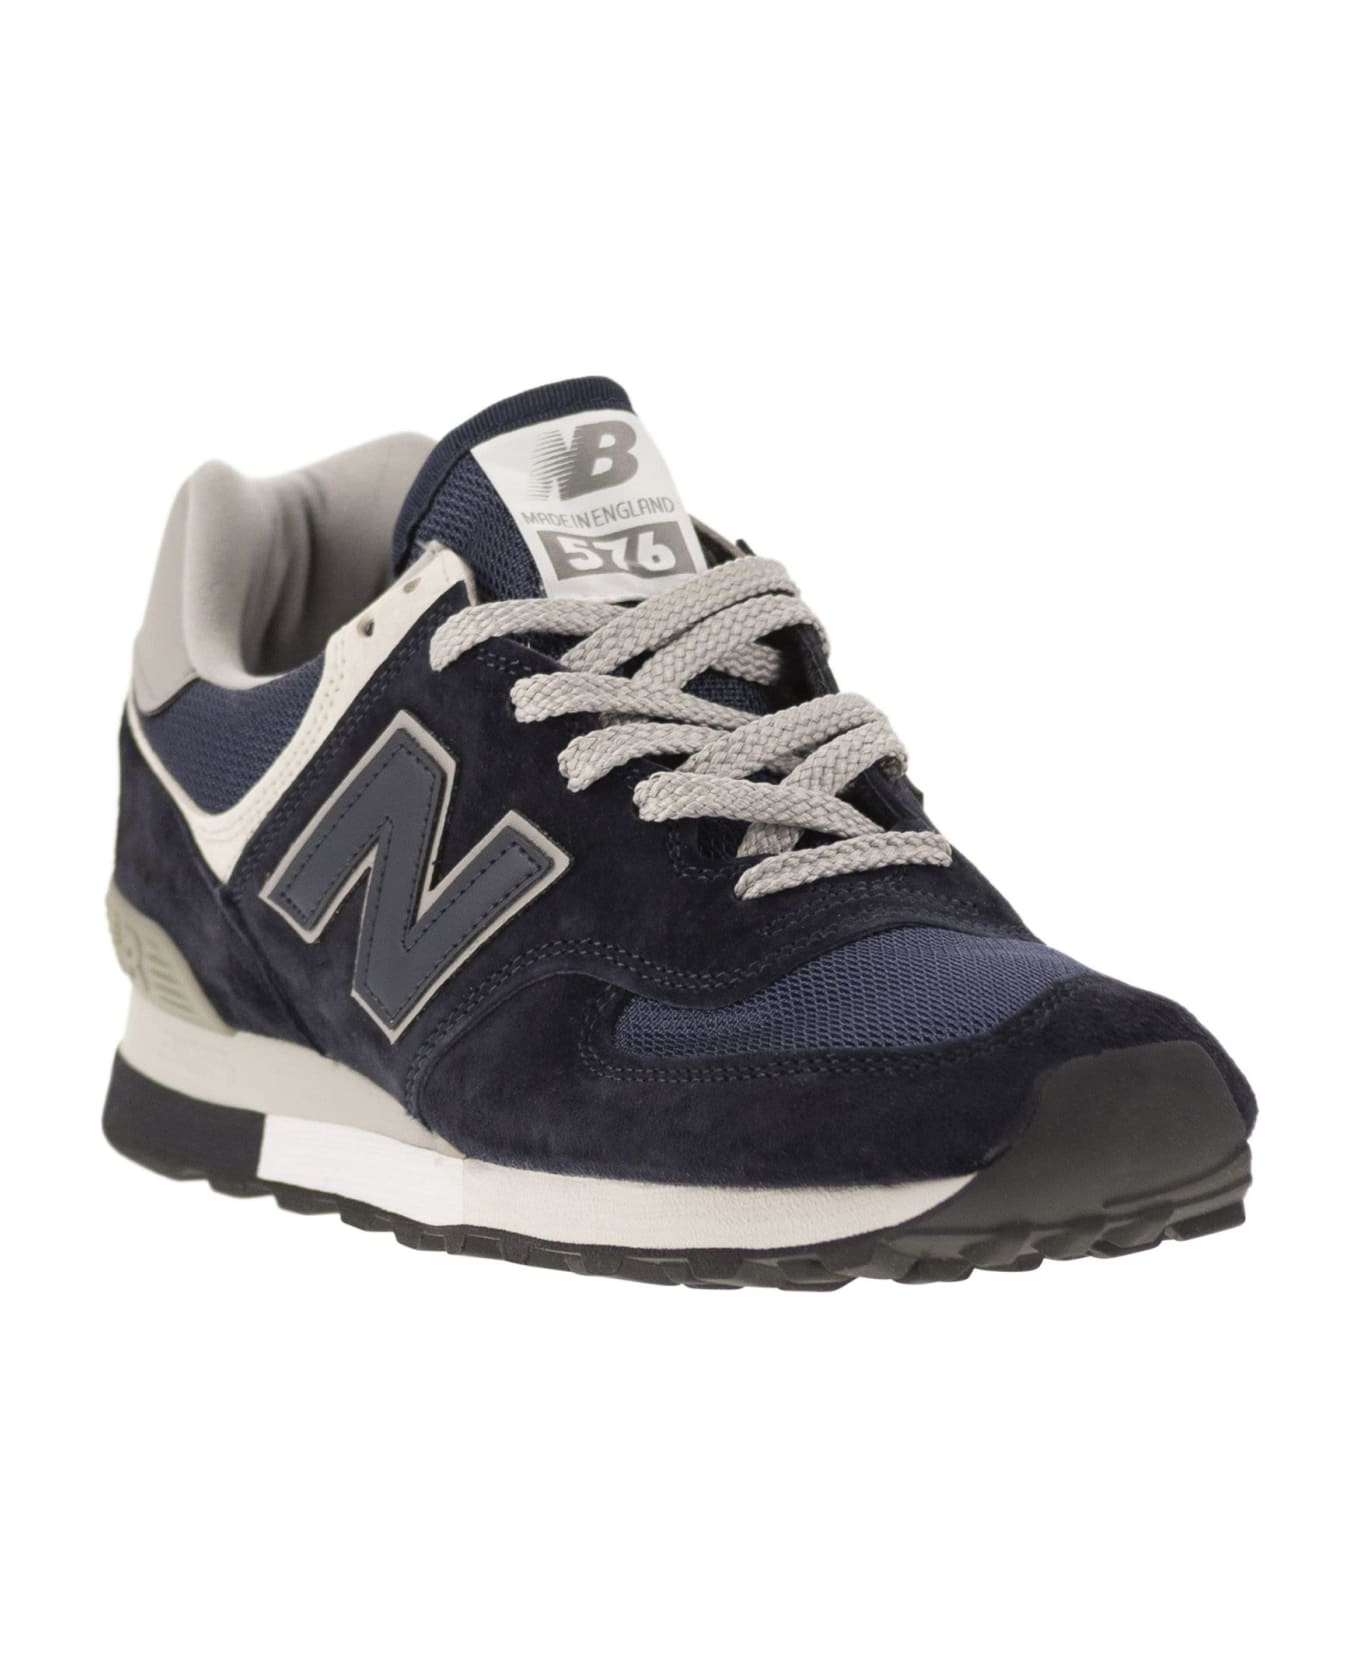 New Balance 576 - Sneakers - Navy スニーカー